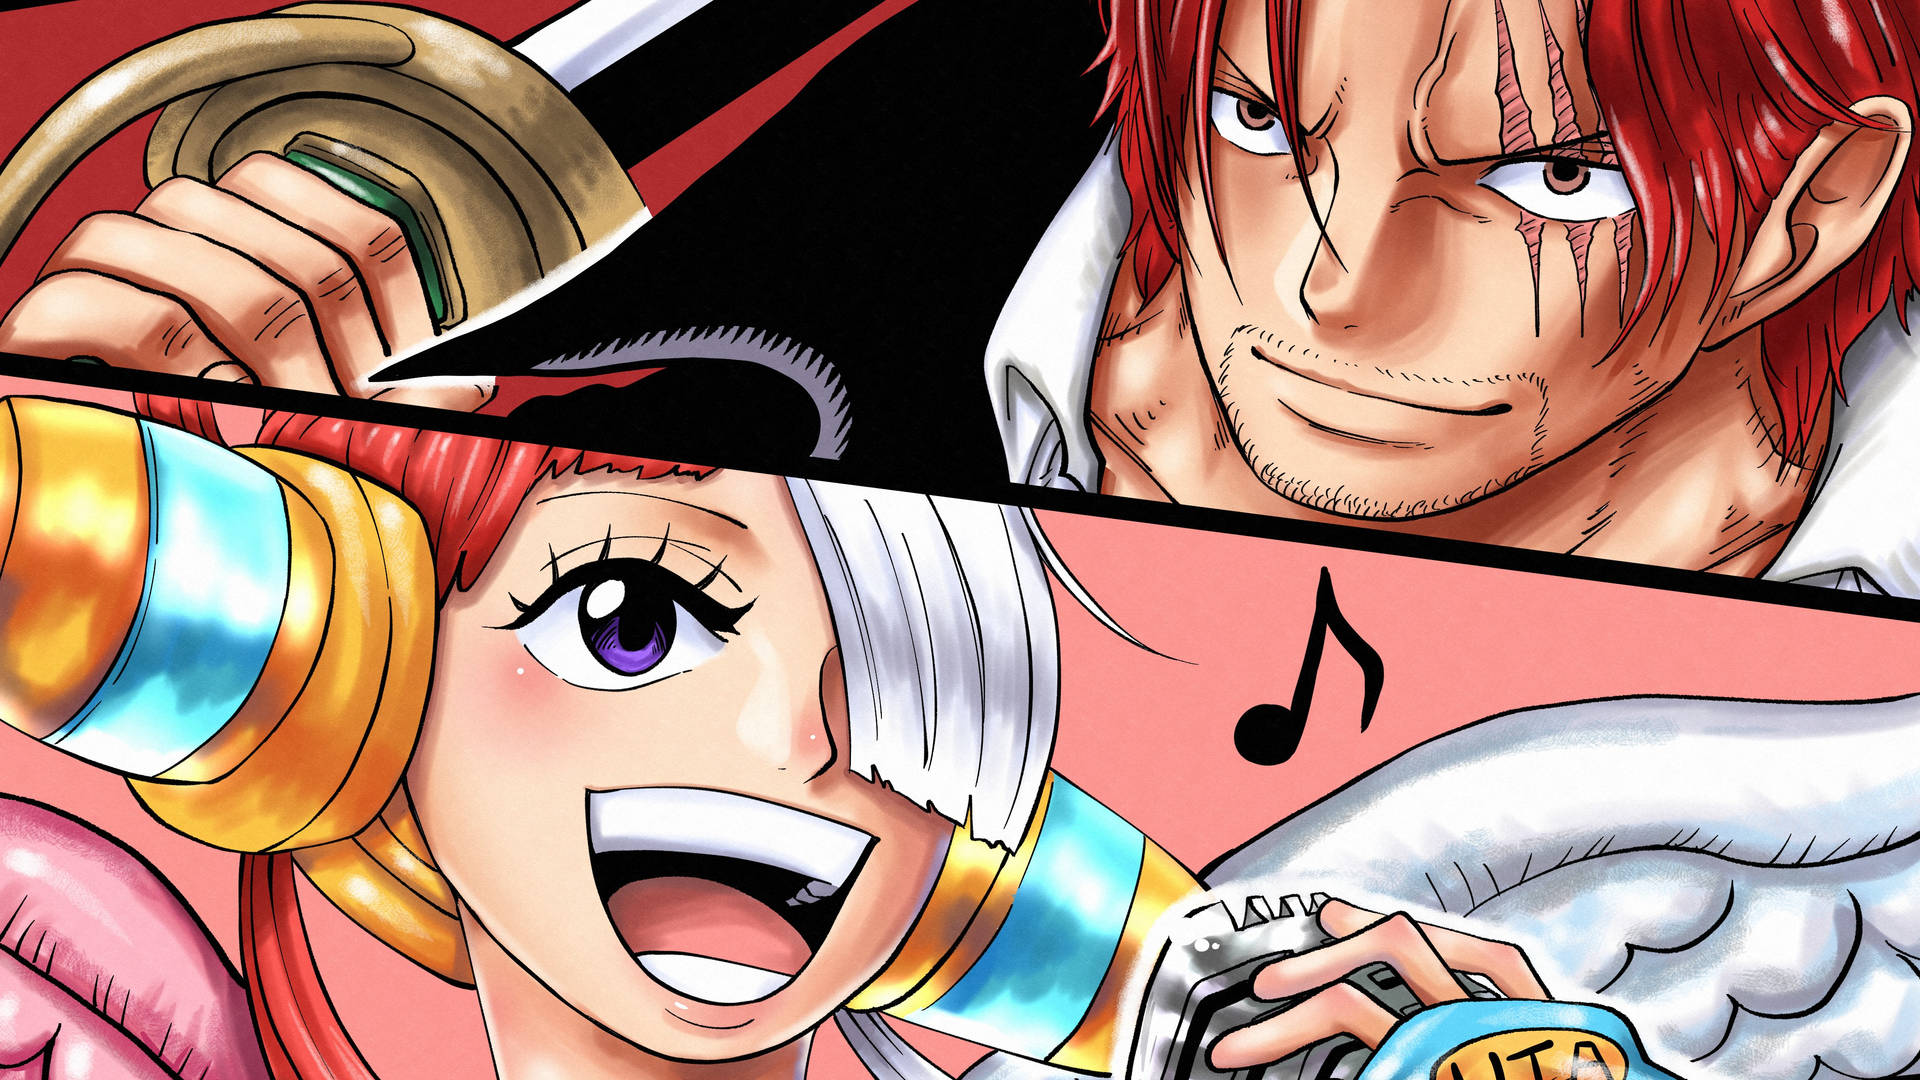 Download Nami And Shanks One Piece Desktop Wallpaper